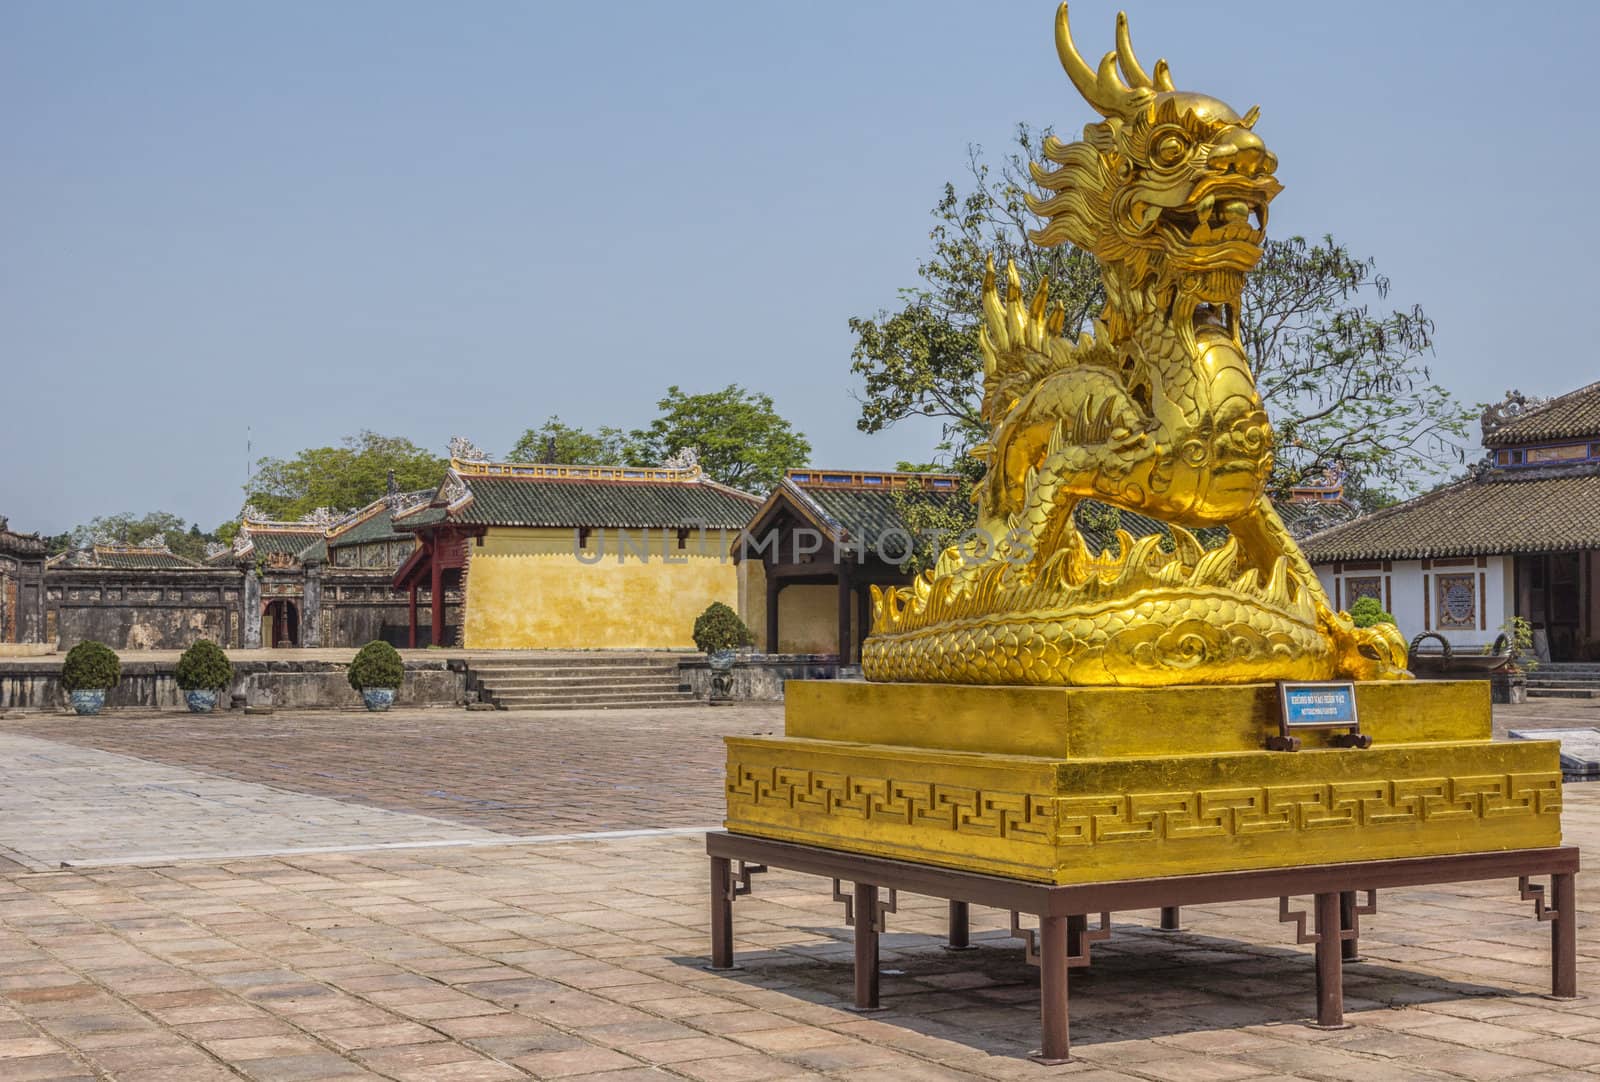 Shining golden statue under blue skies with sino-vietnamese architecture in background.